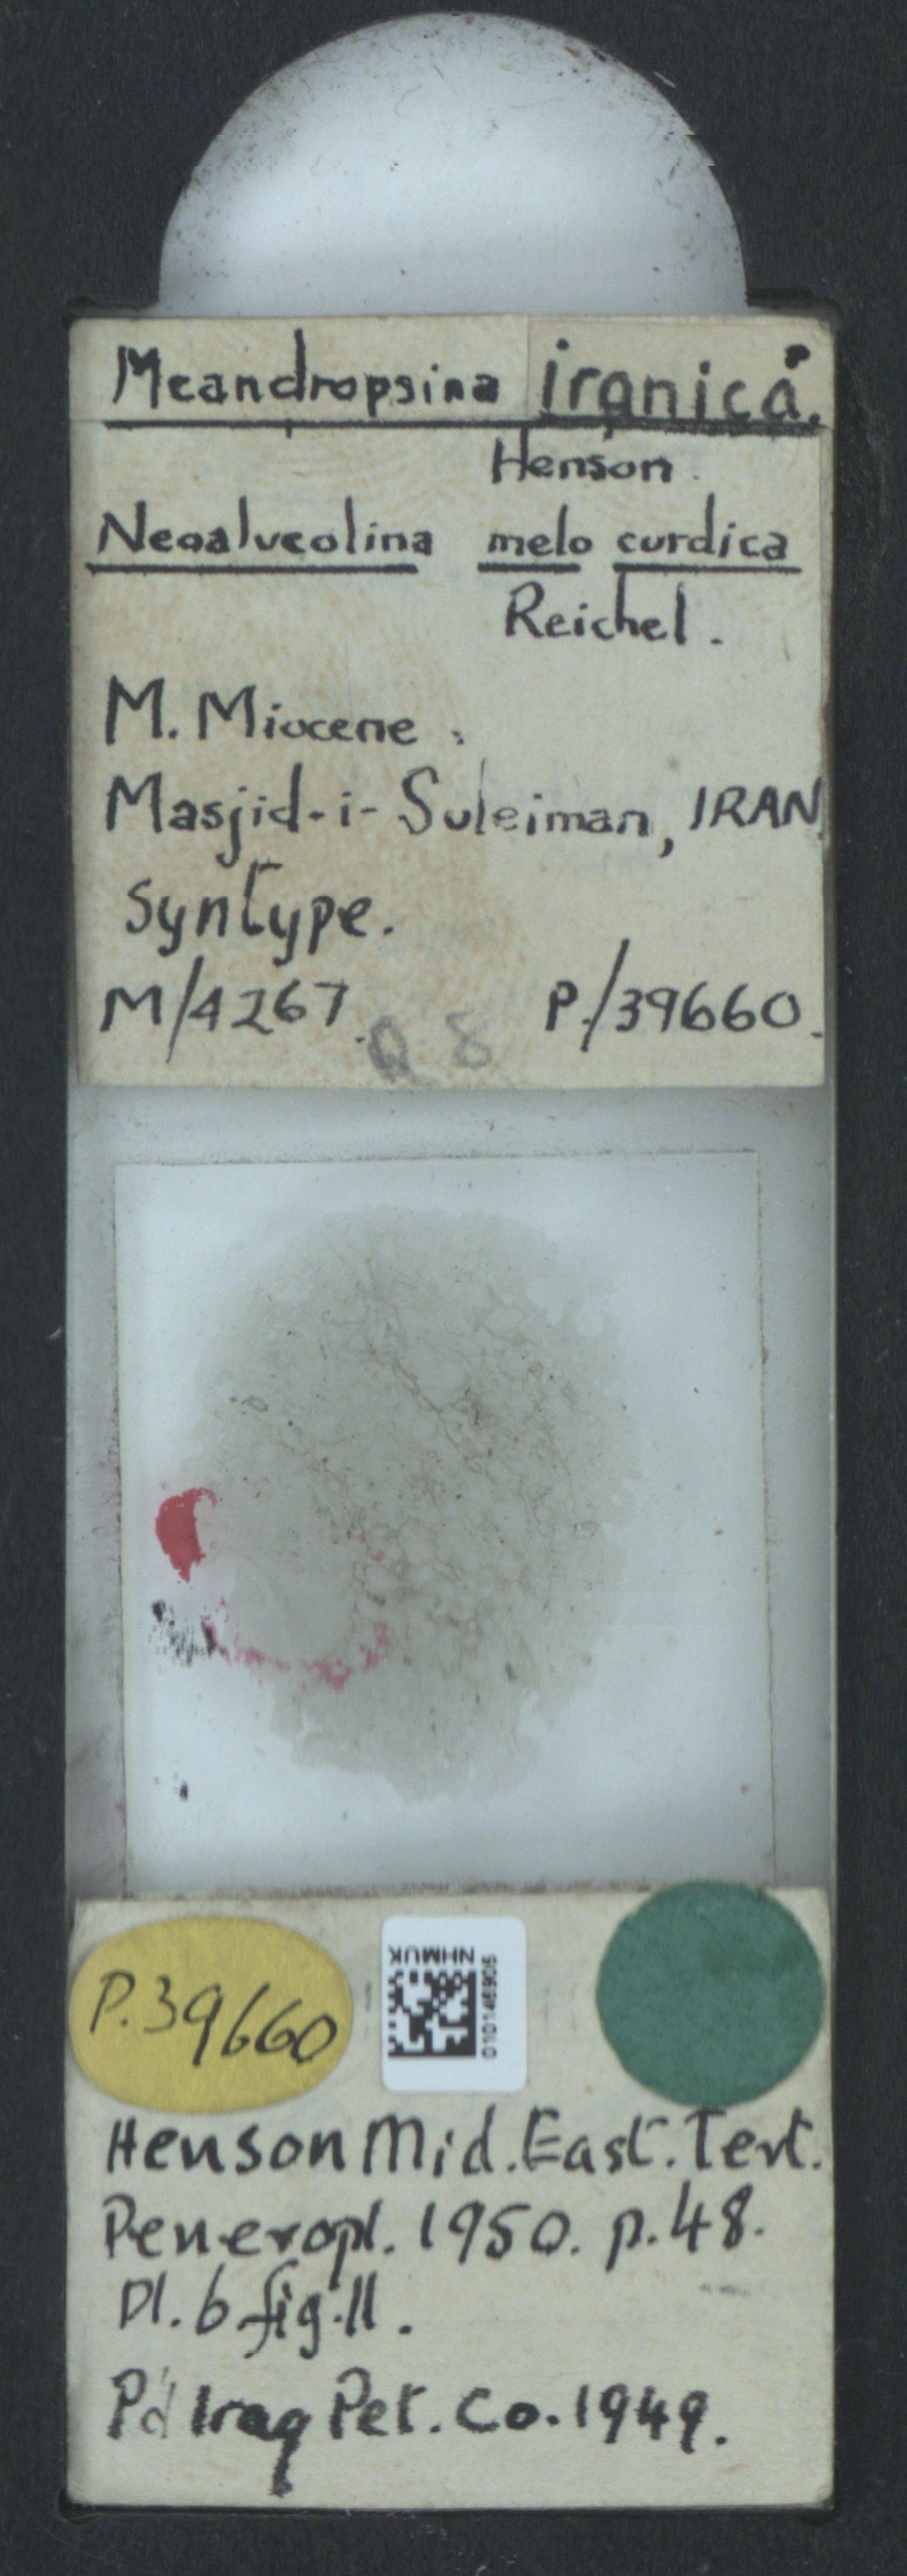 To NHMUK collection (Meandropsina iranica Henson, 1950; Syntype; NHMUK:ecatalogue:2323374)